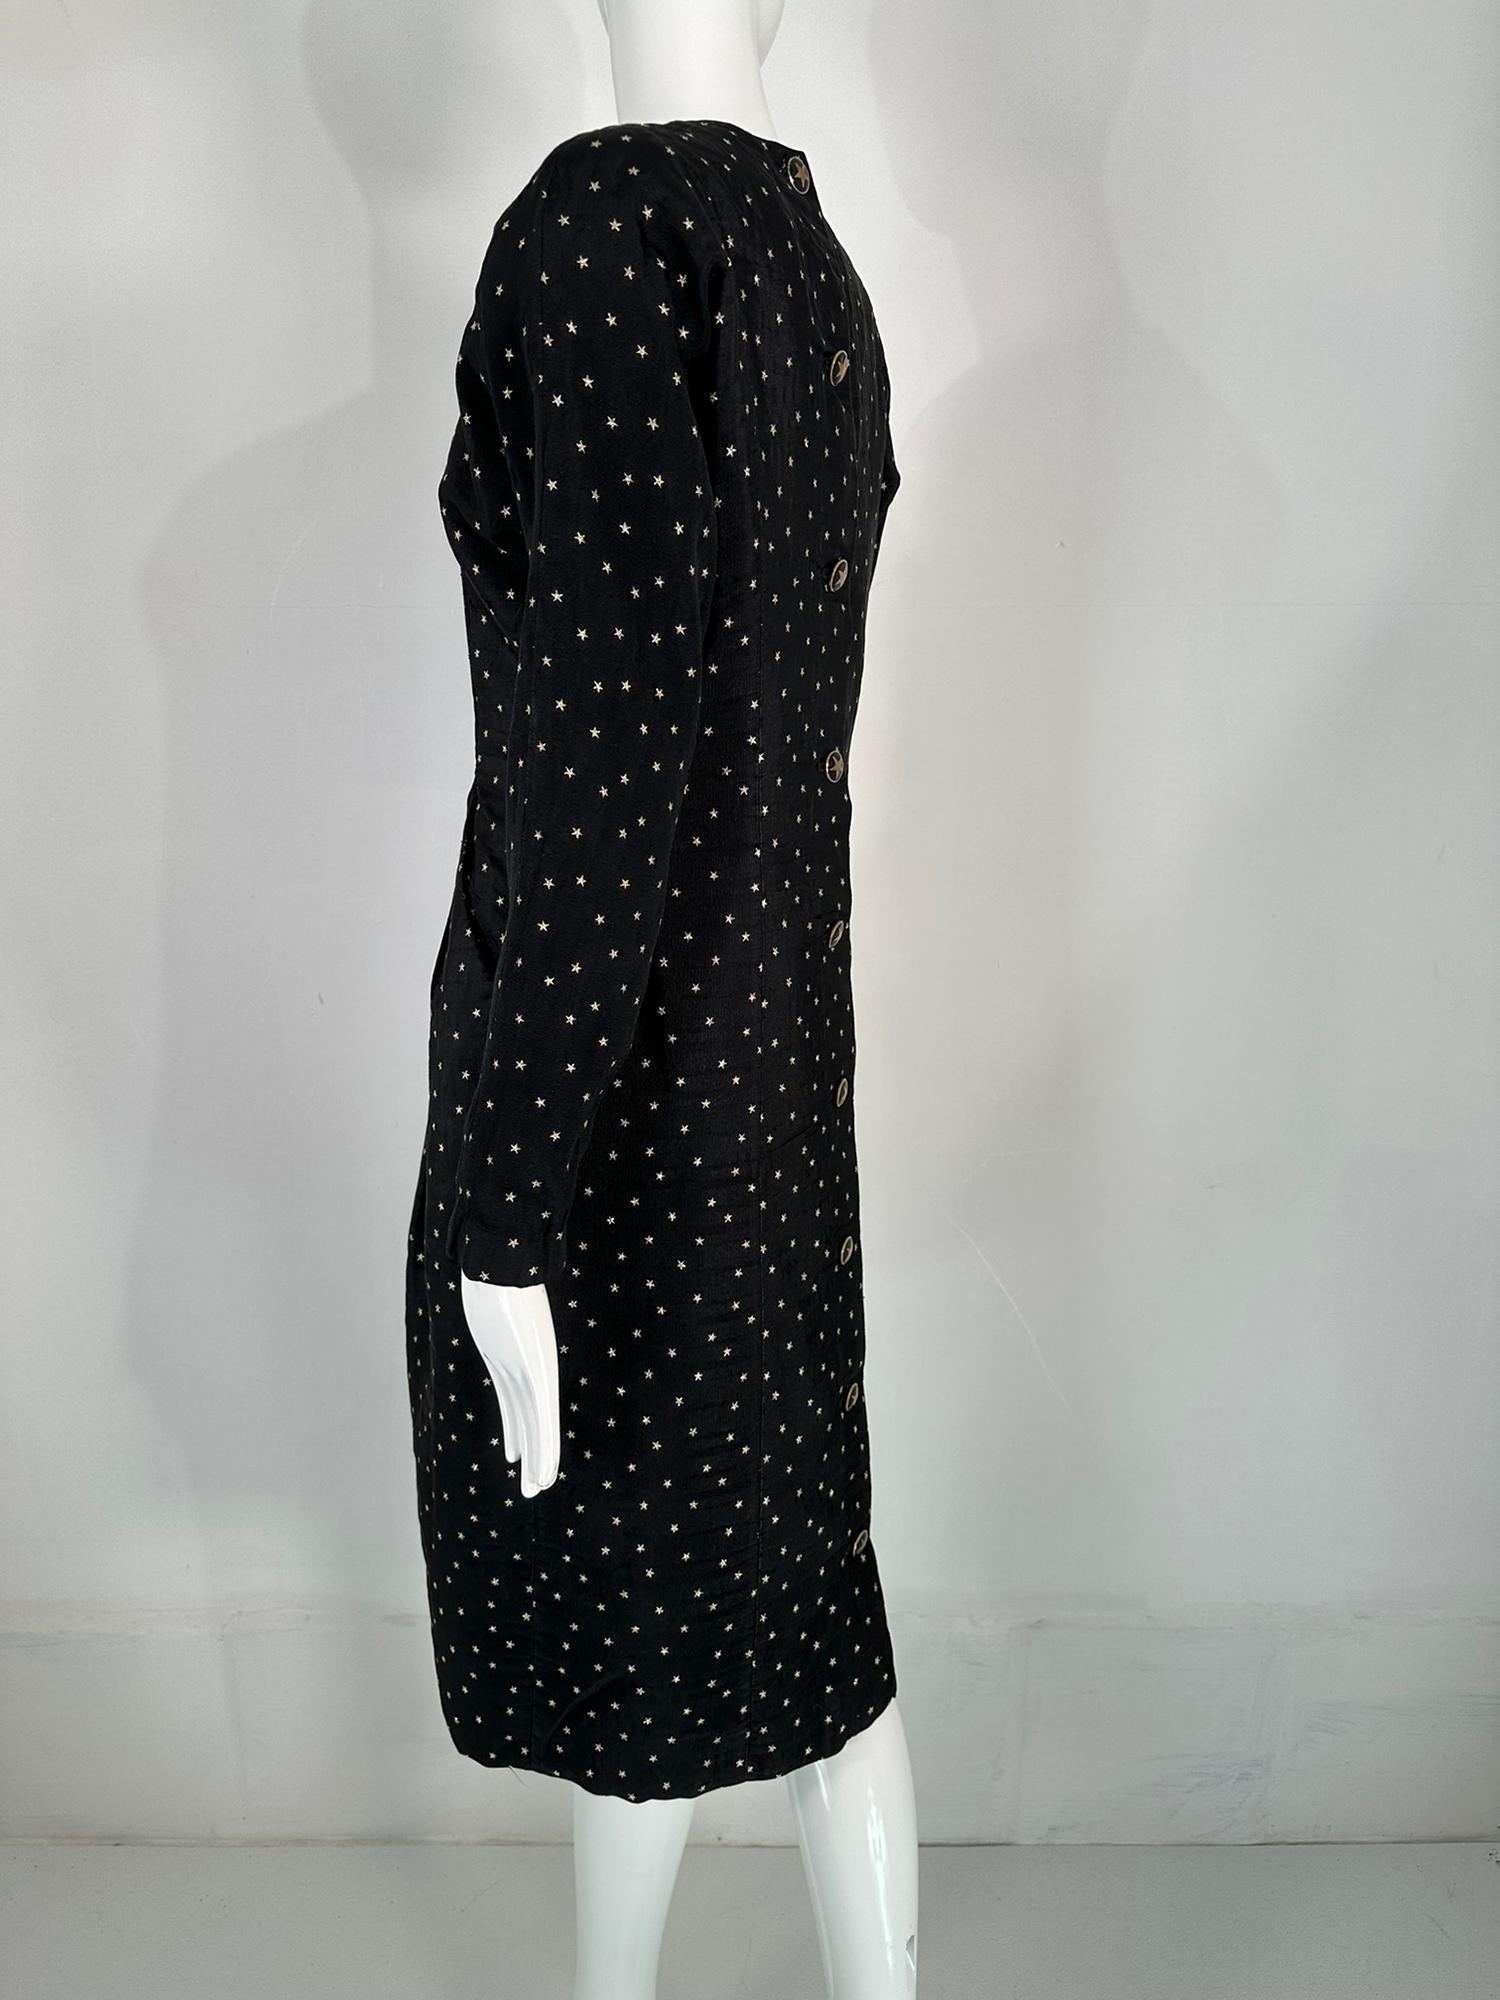 Geoffrey Beene Gold Stars on Black Faille Button Back Dress 1980s 4